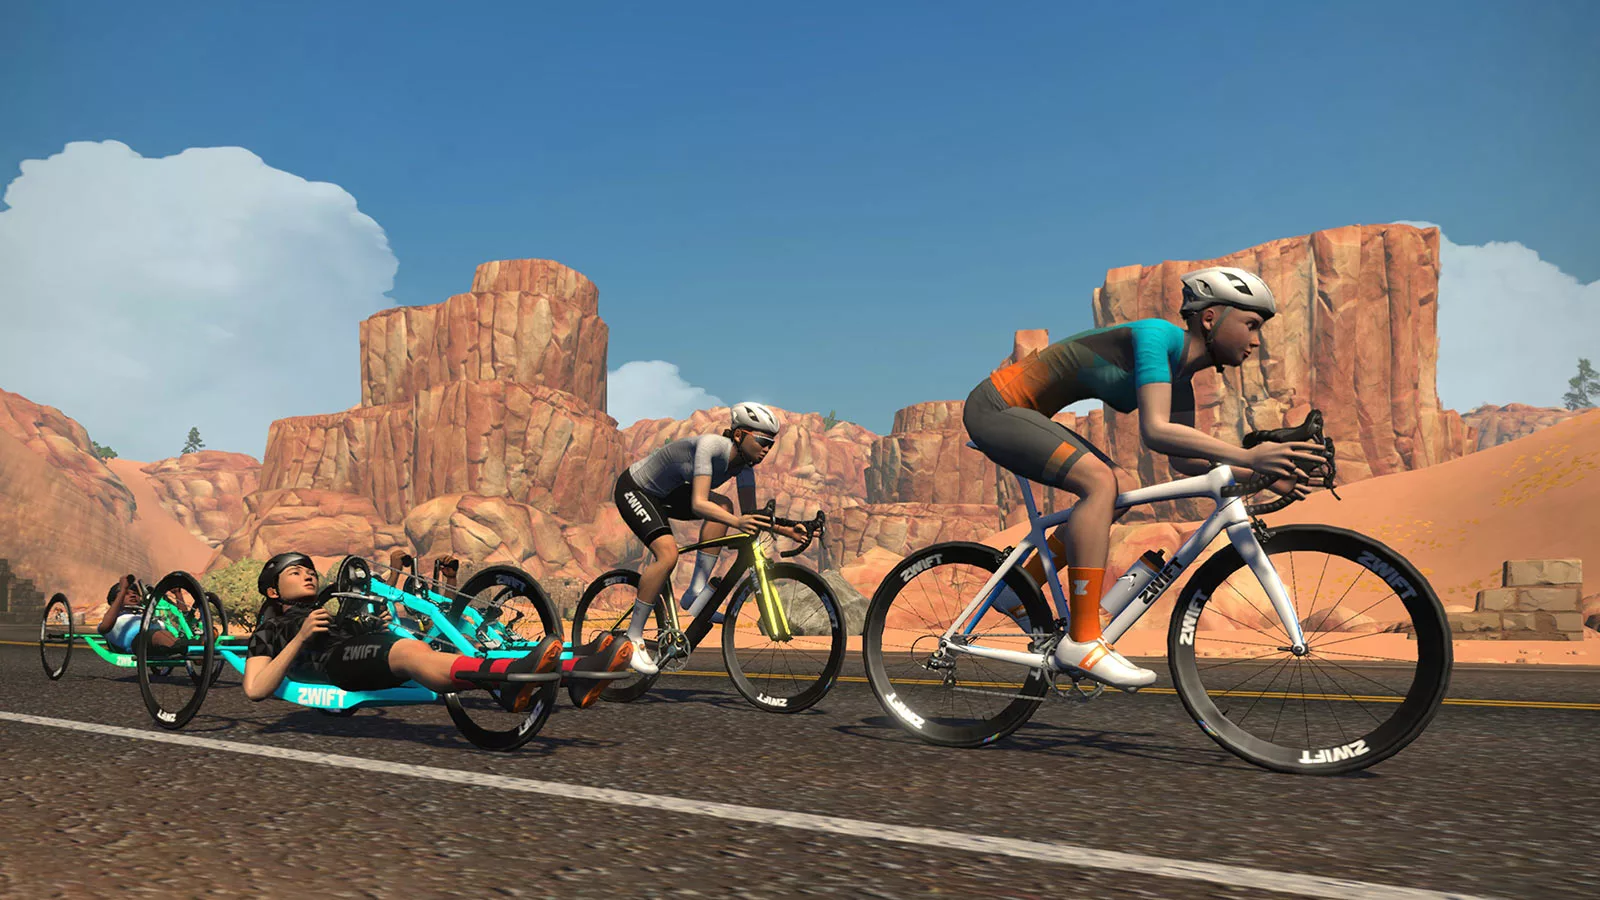 zwift adds handcycles to race alongside regular bikes